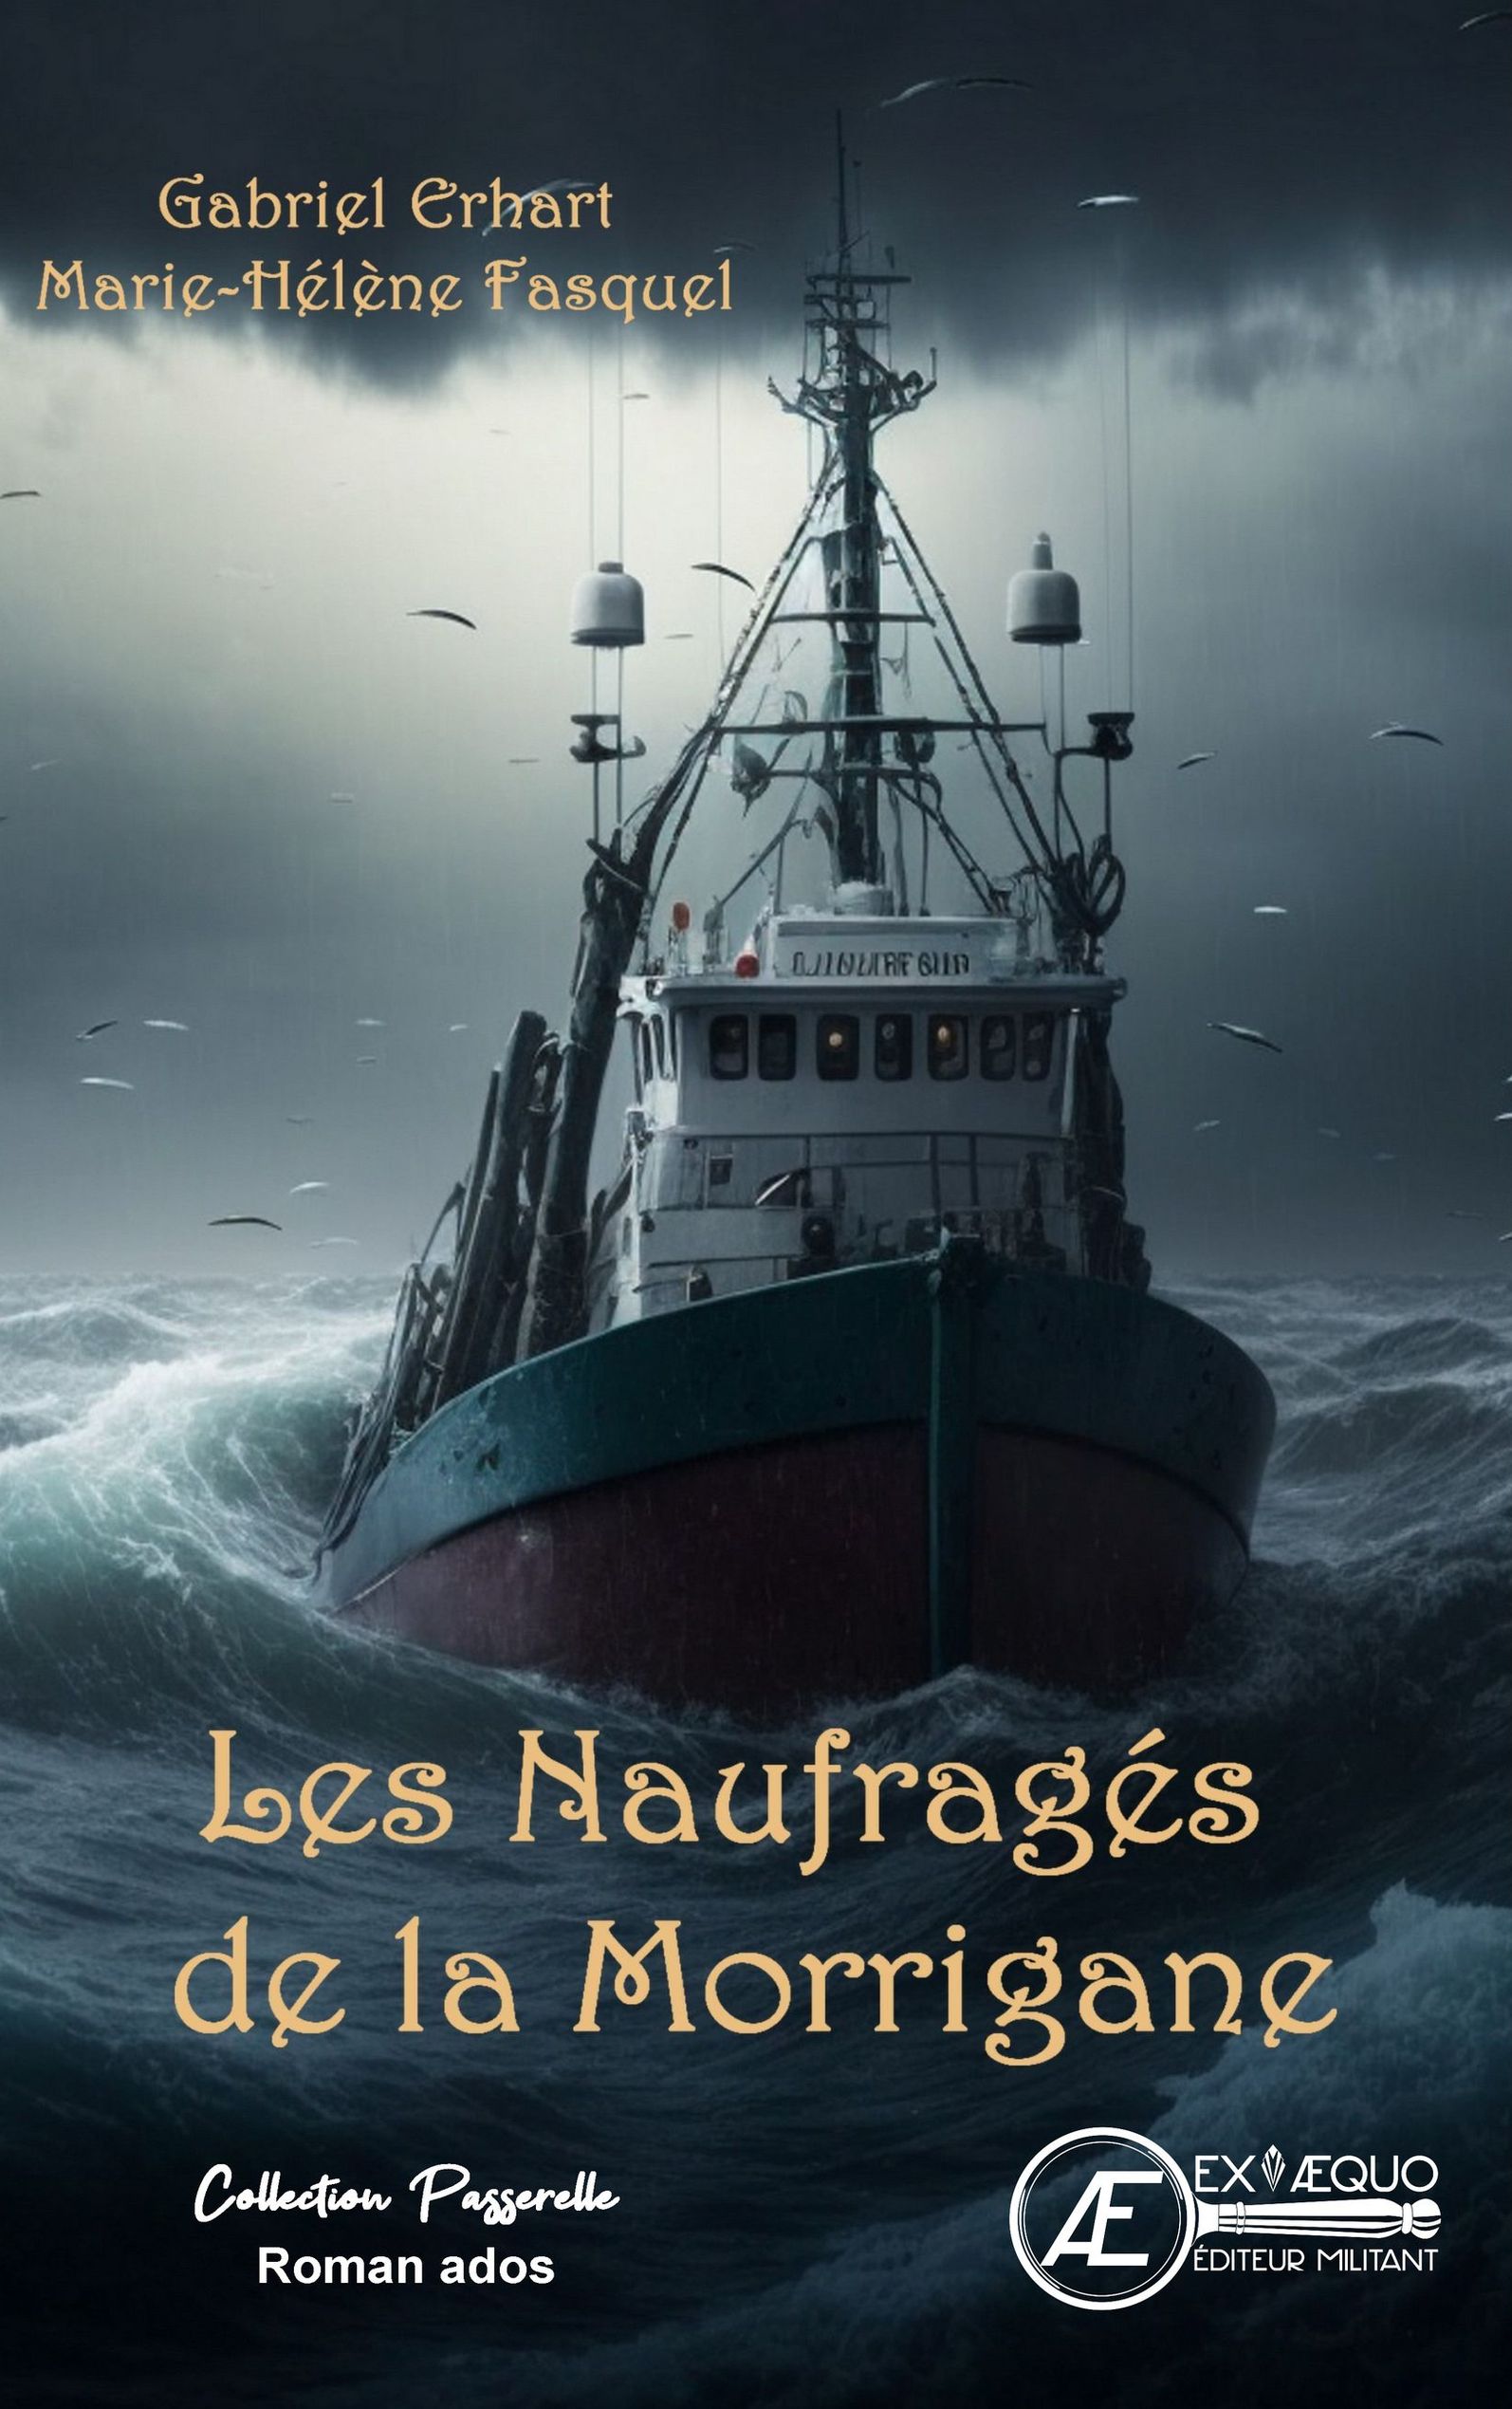 You are currently viewing Les naufragés de la Morrigane